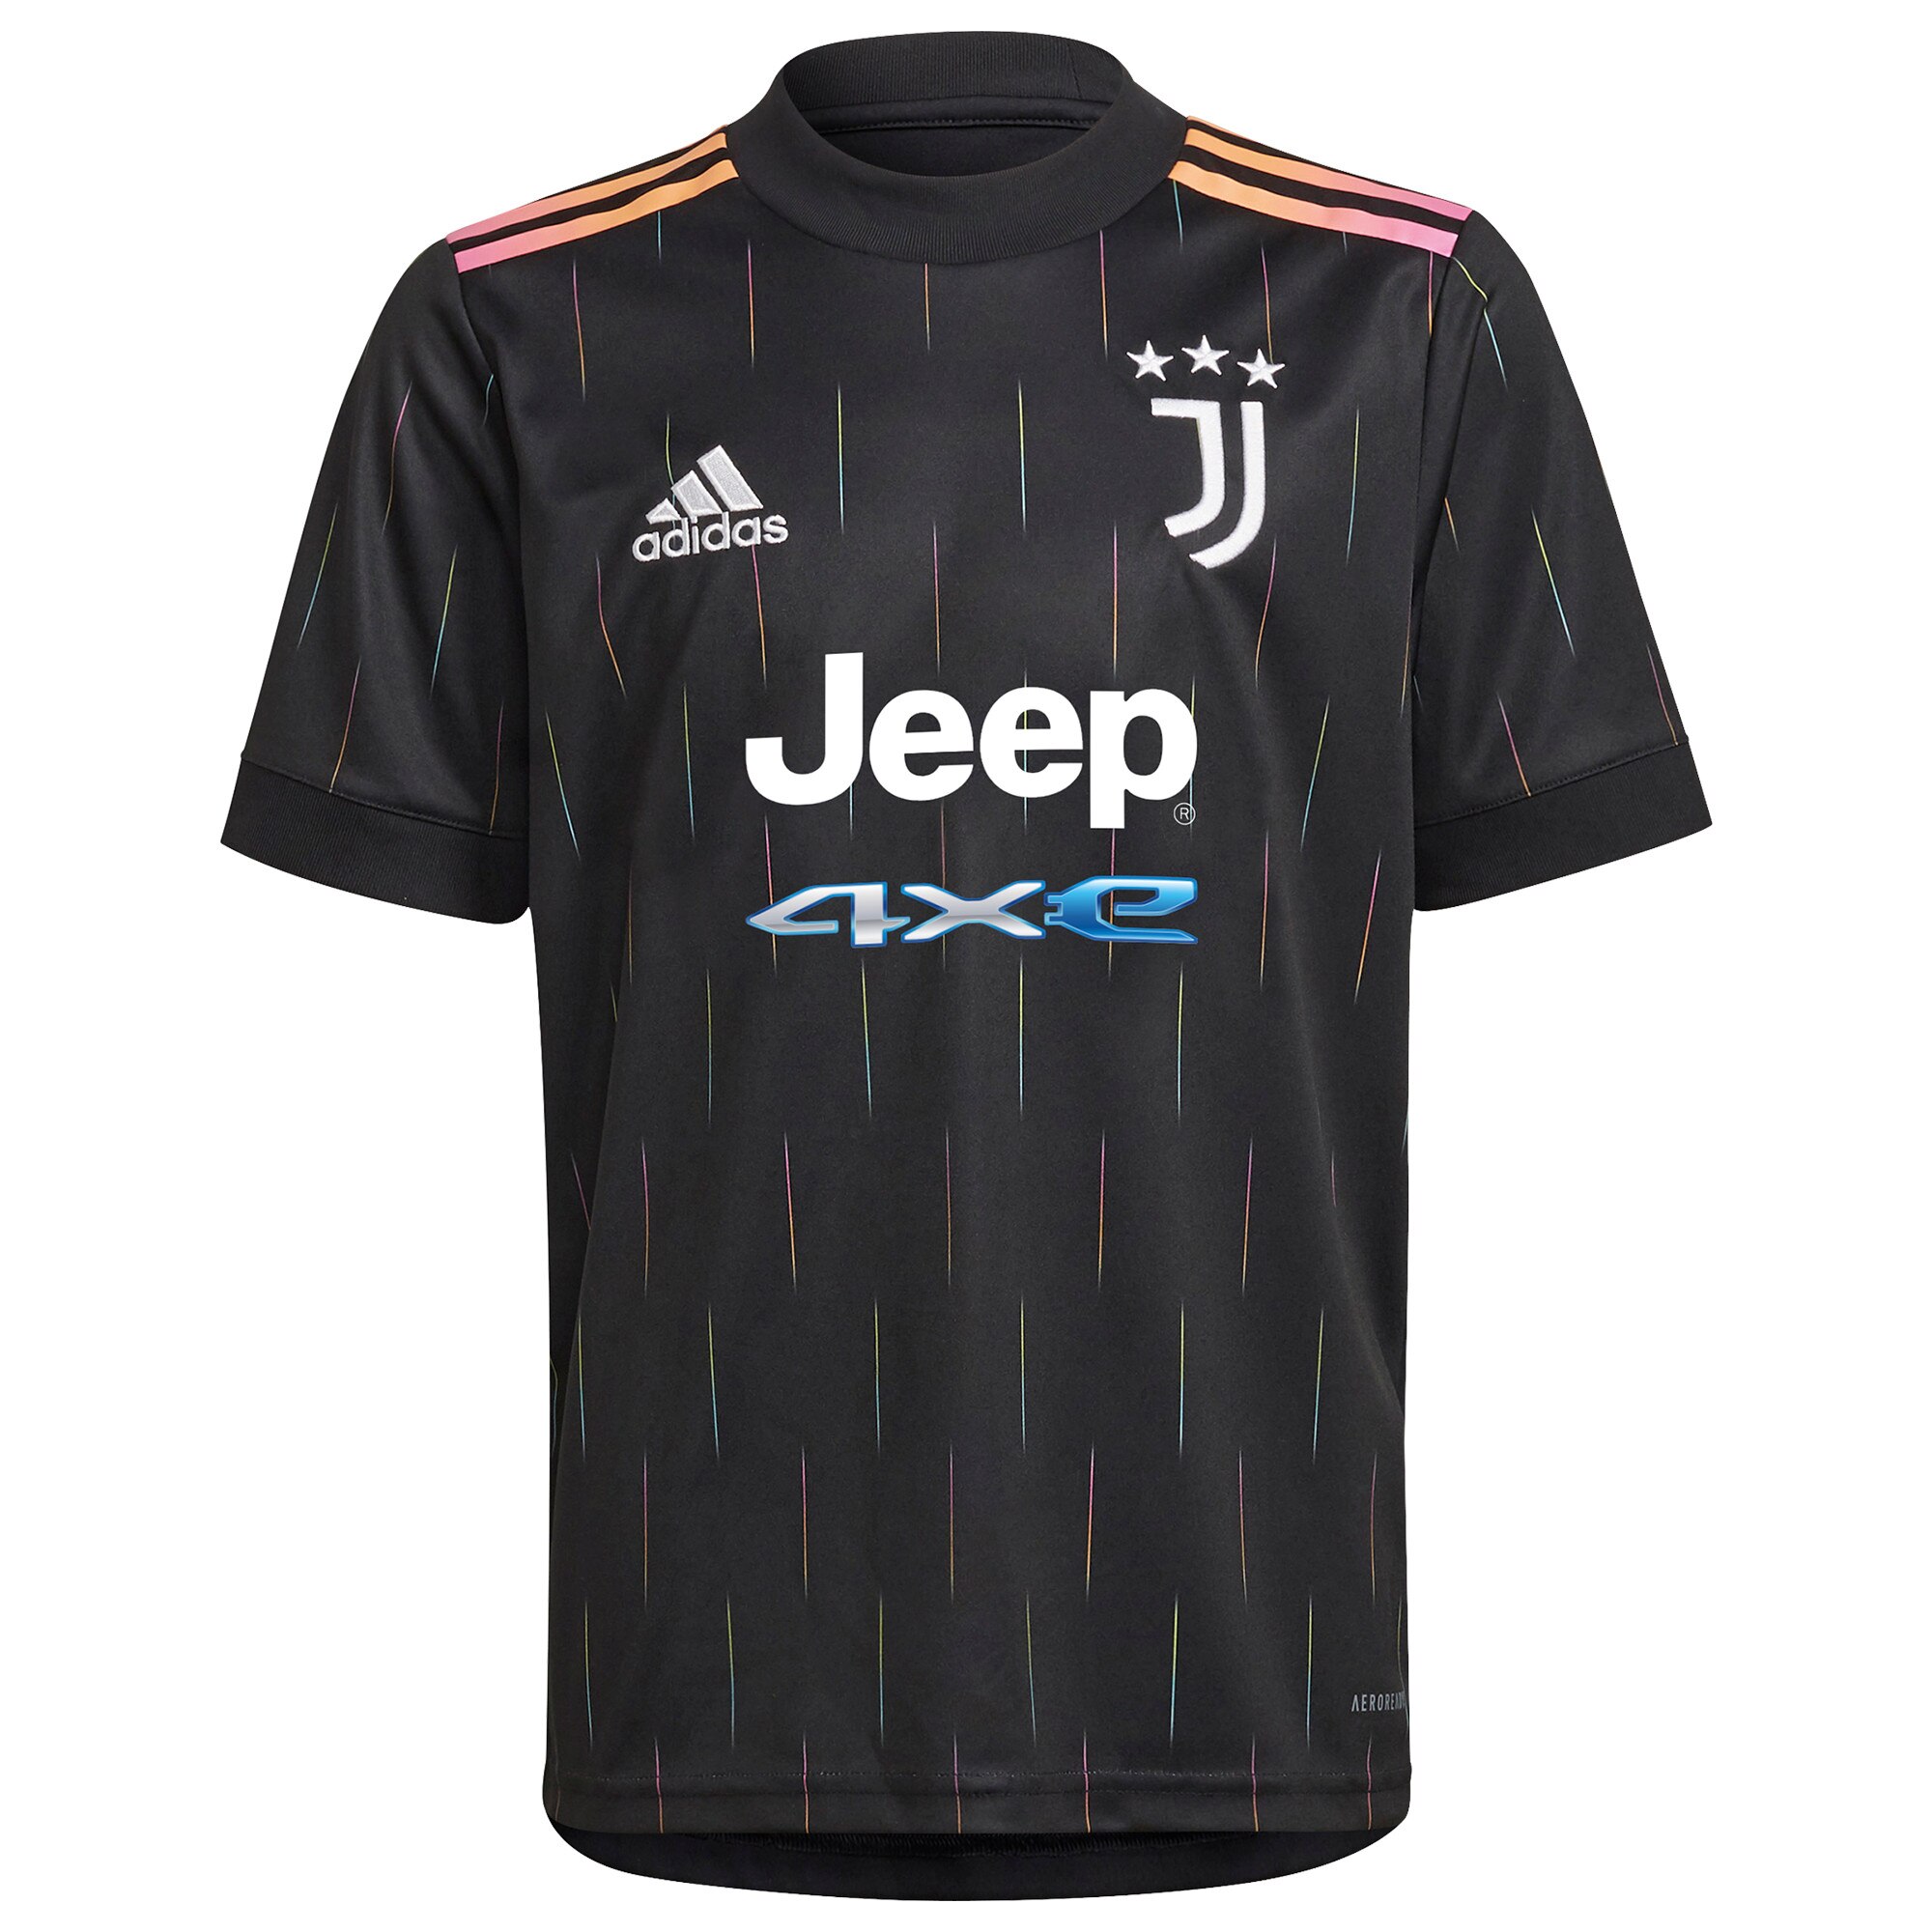 Juventus Away Shirt 2021-22 with Ronaldo 7 printing